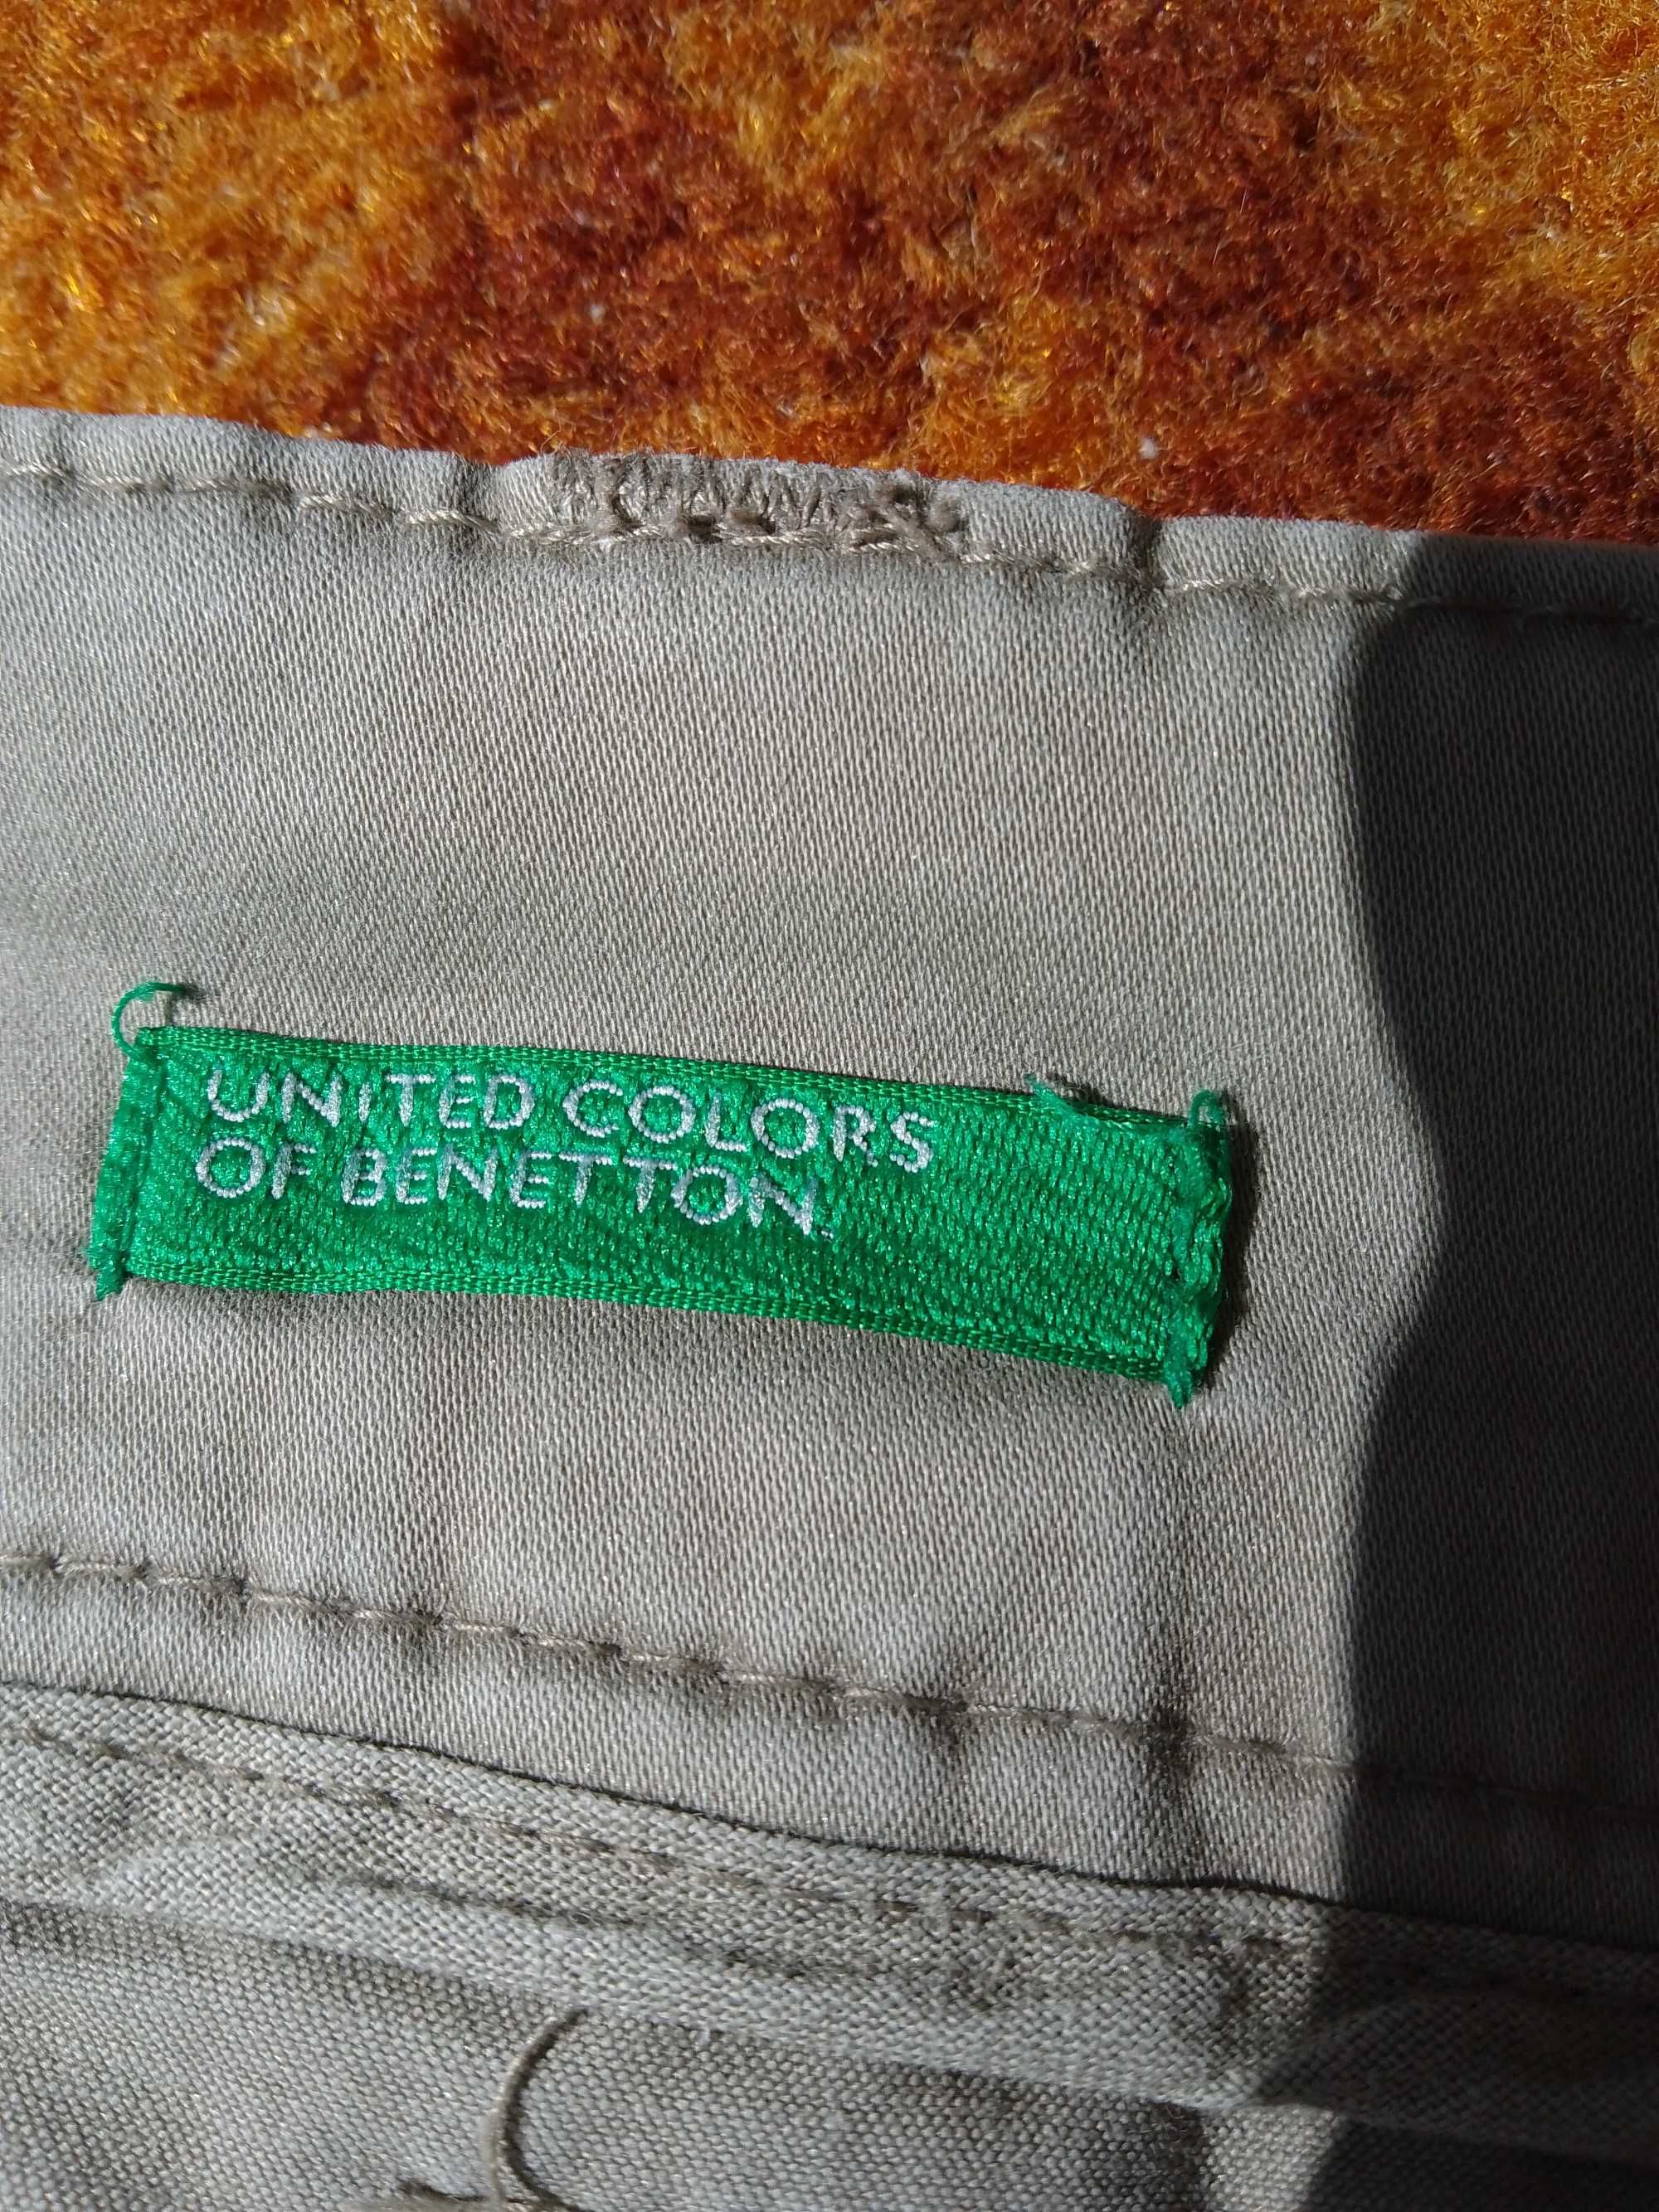 Spodnie khaki Benetton r.38